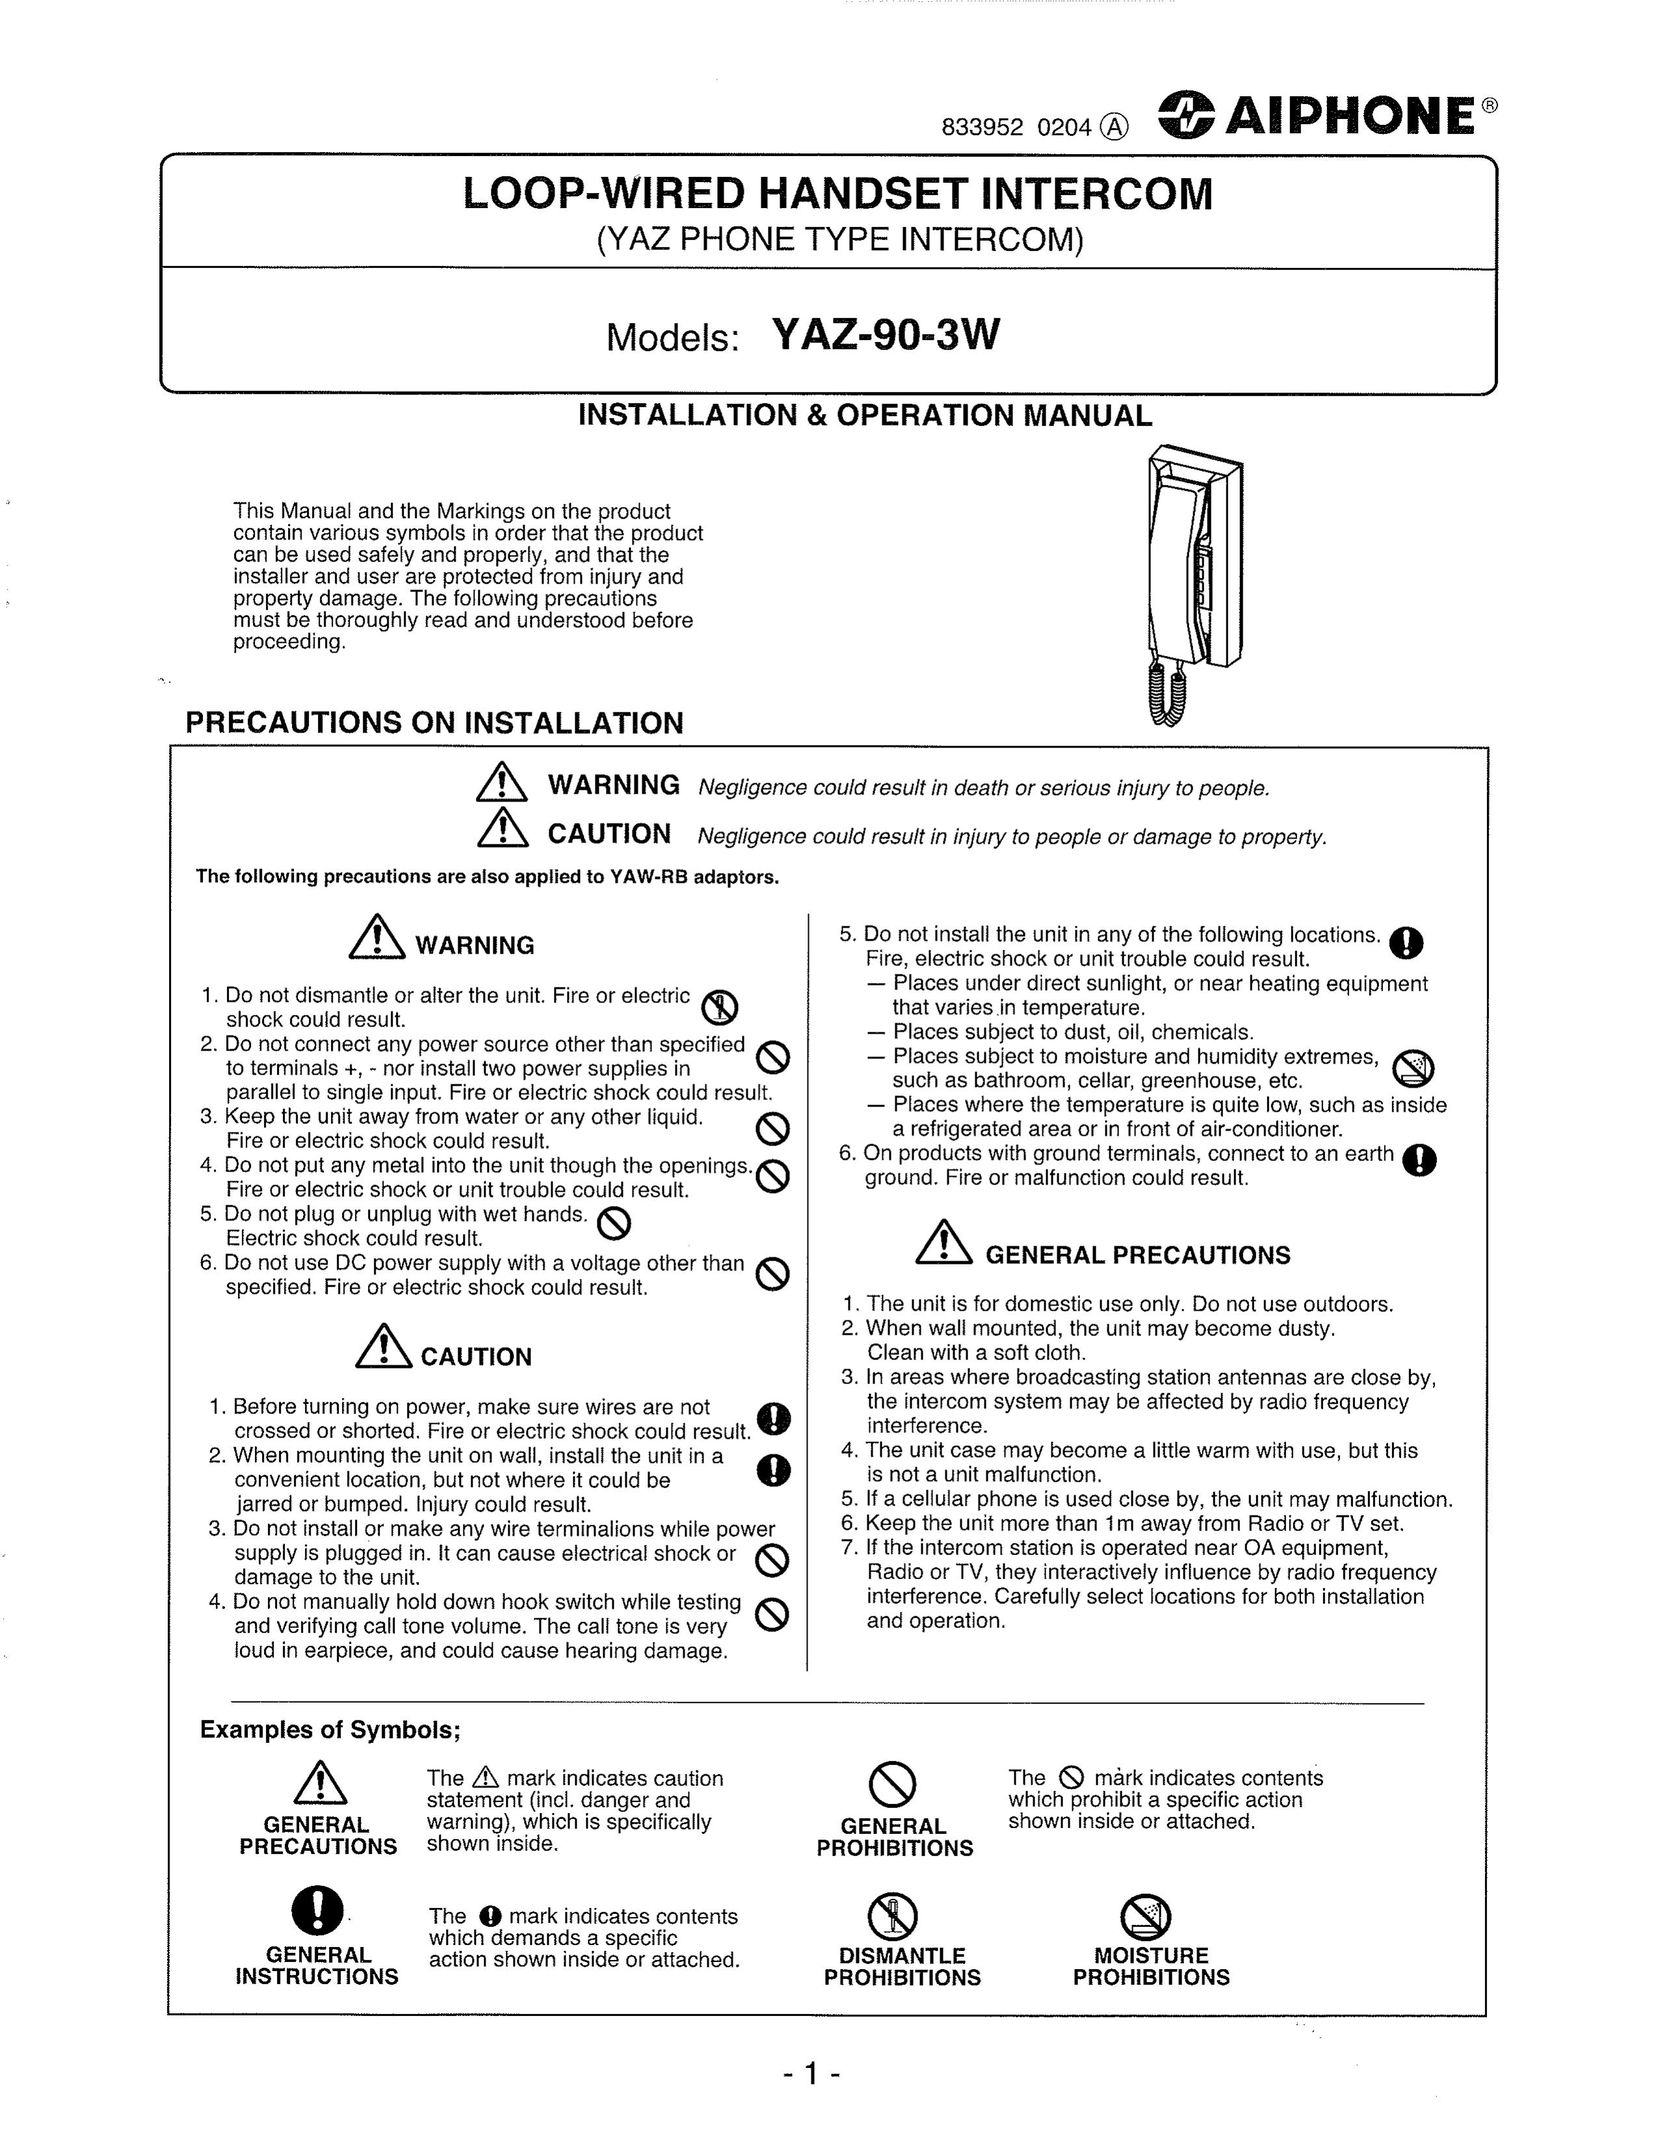 Aiphone YAZ-90-3W Telephone User Manual